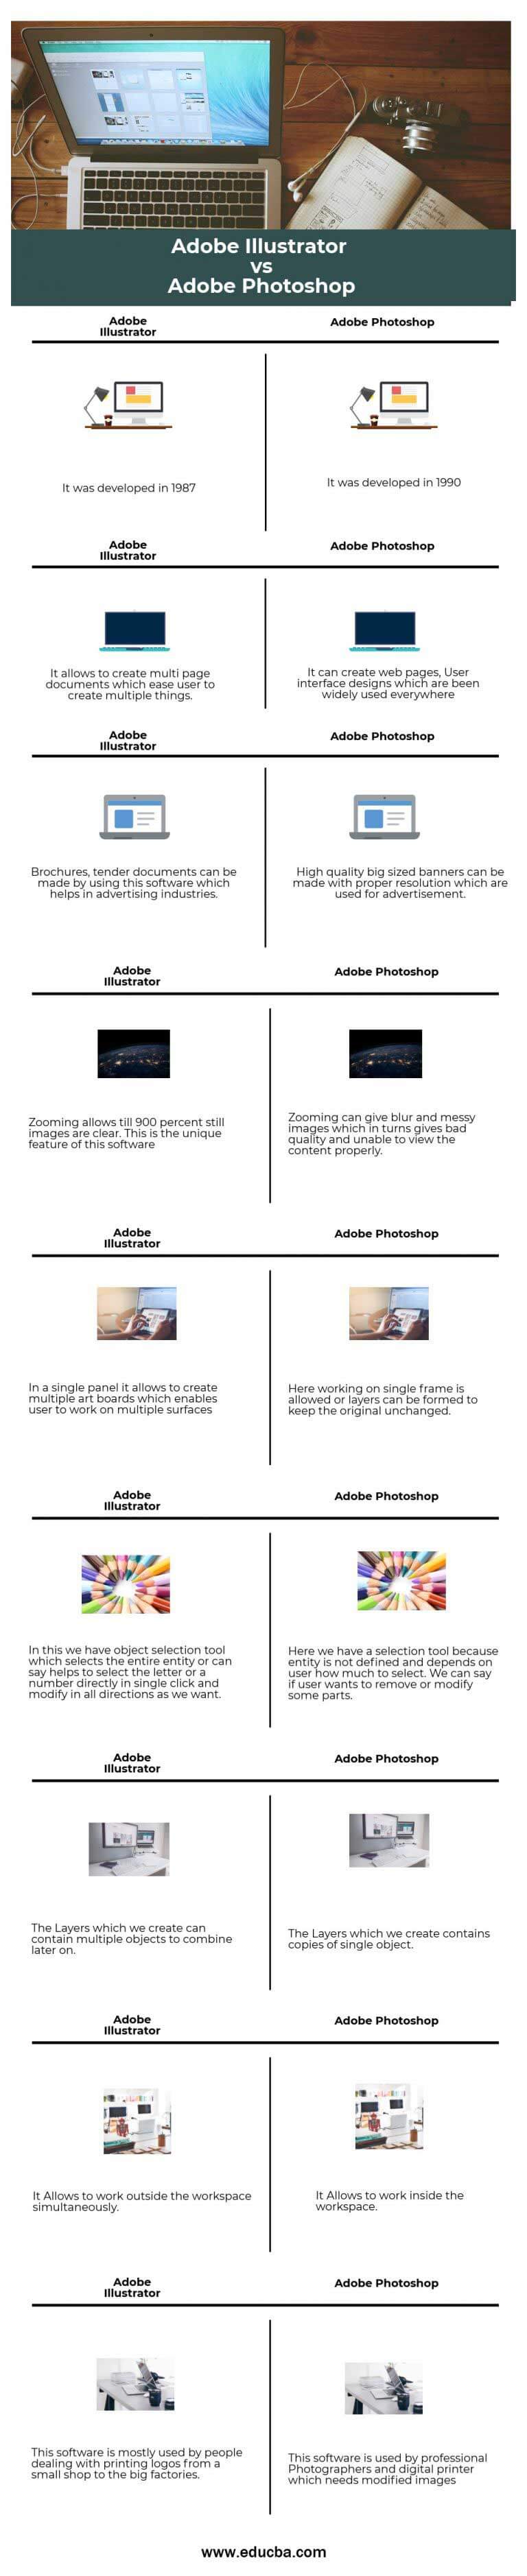 Difference Between Adobe Illustrator vs Adobe Photoshop